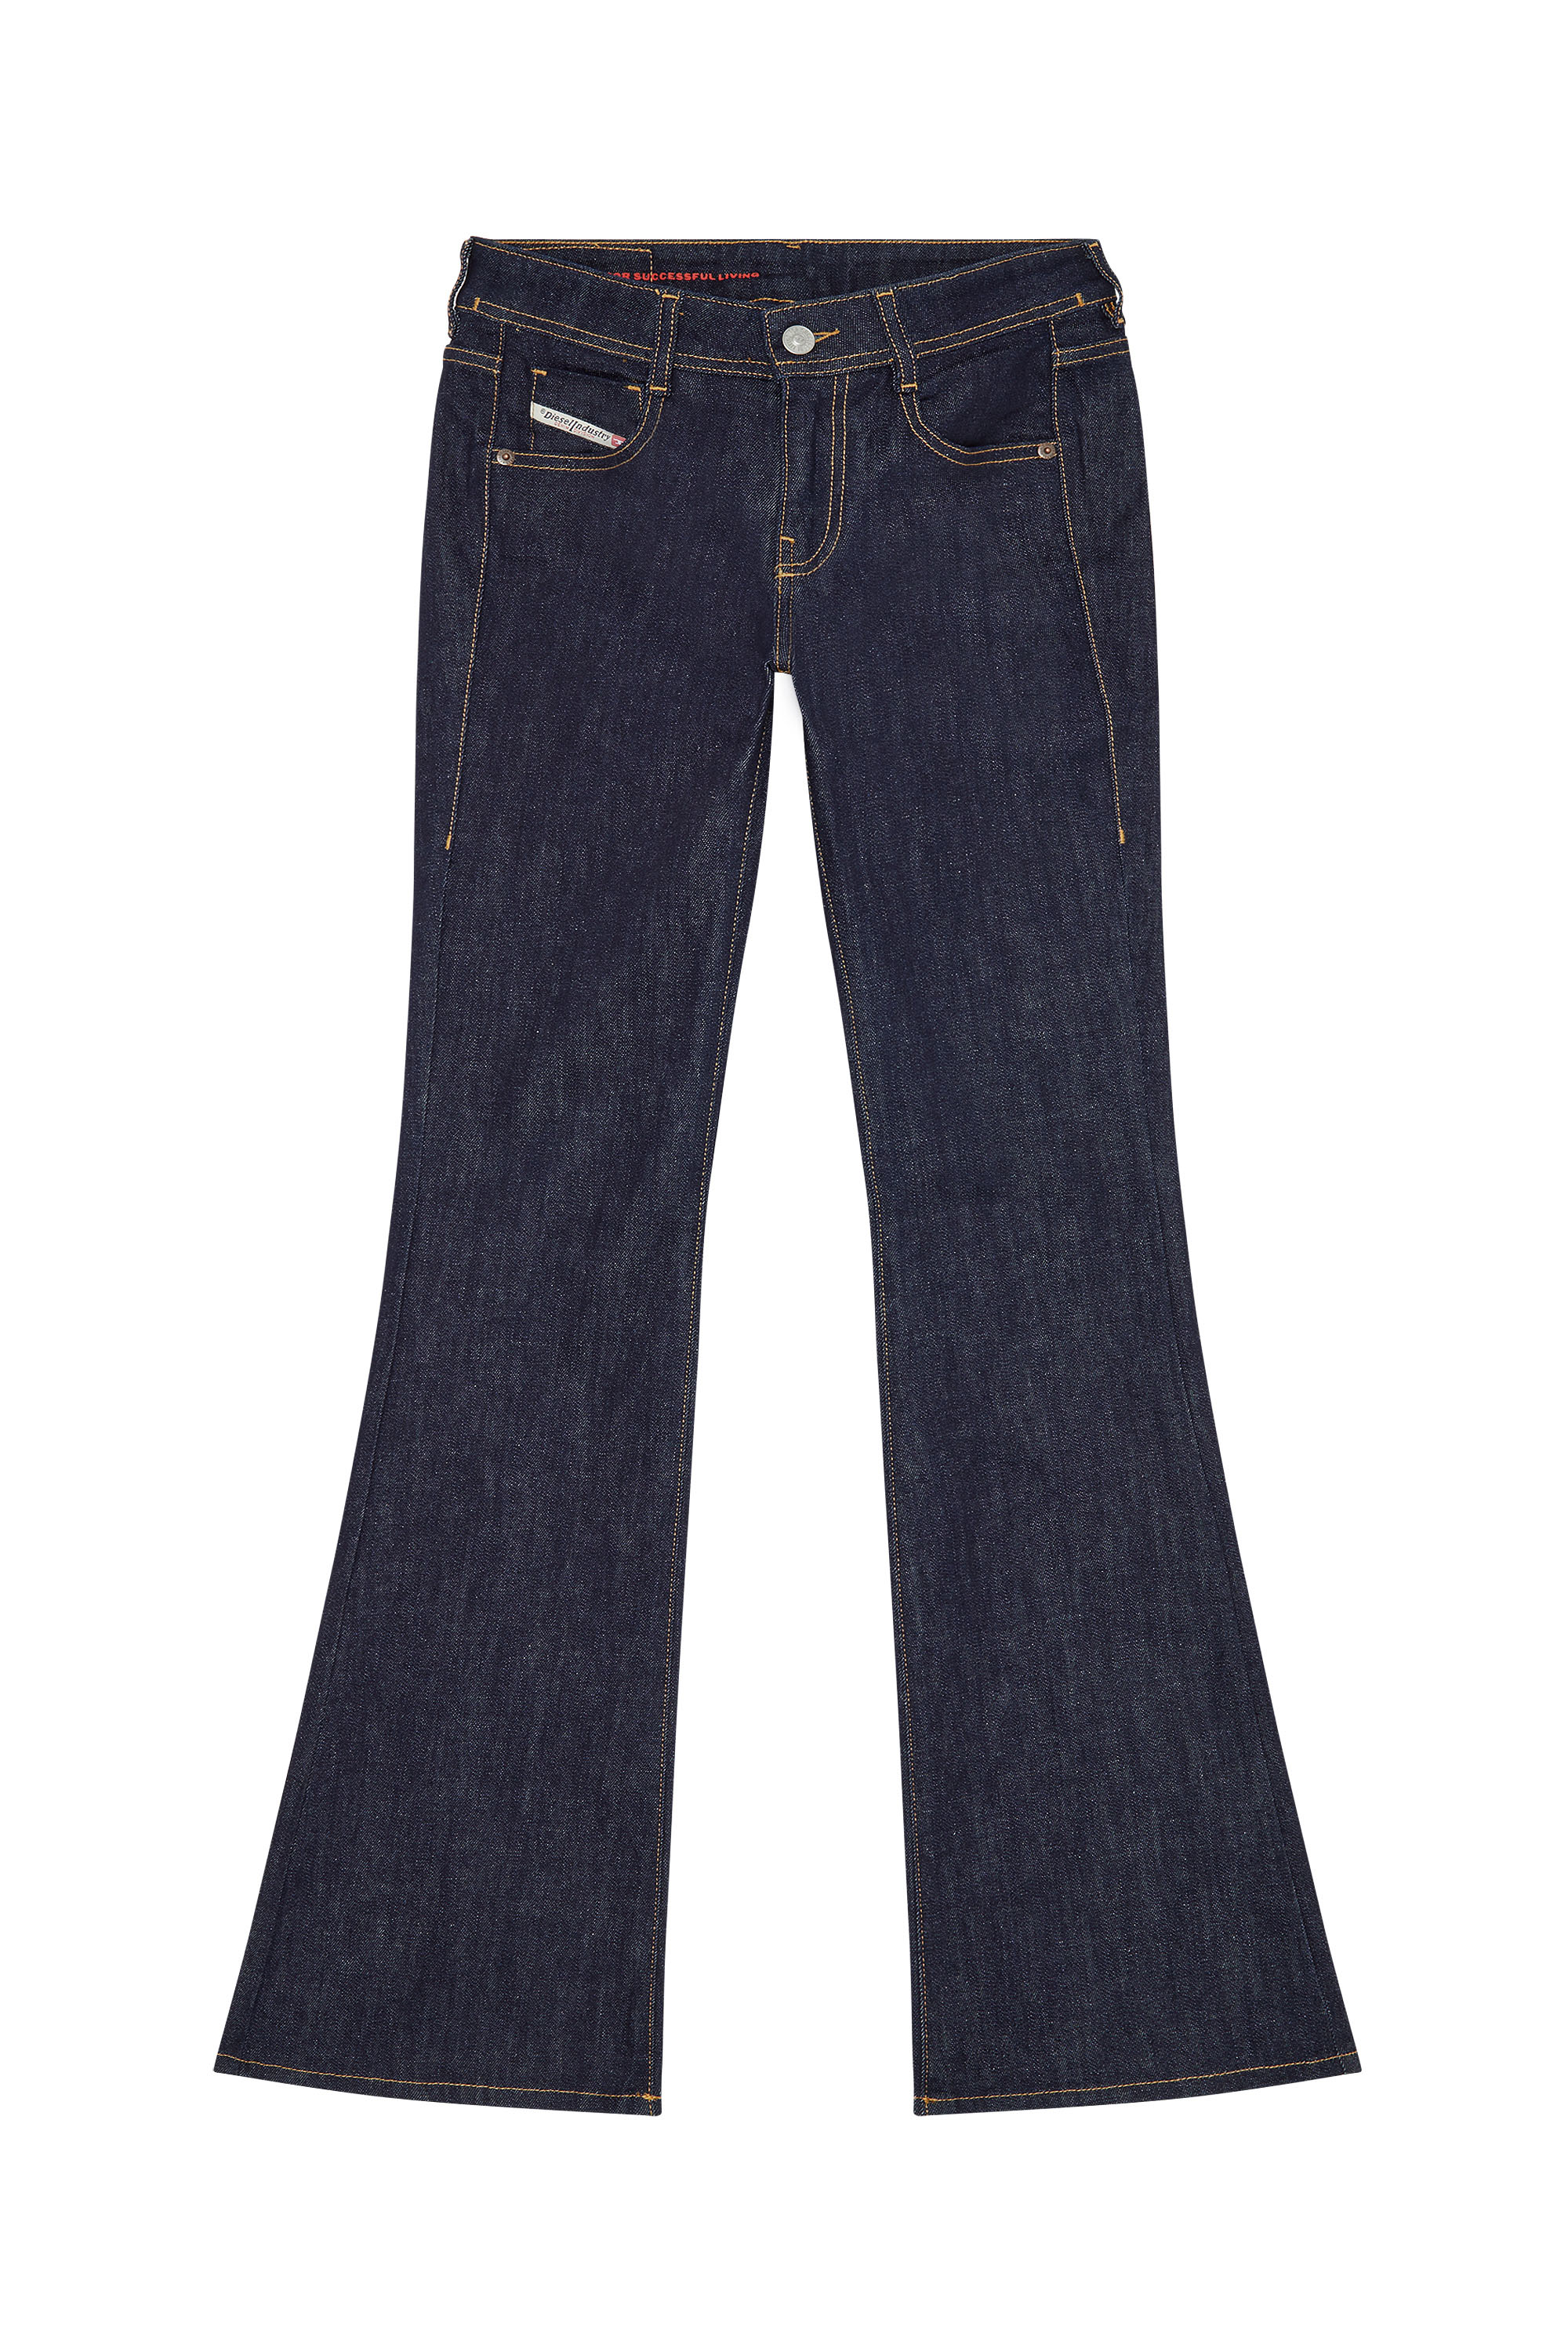 1969 D-EBBEY Z9B89 Bootcut and Flare Jeans, Bleu Foncé - Jeans